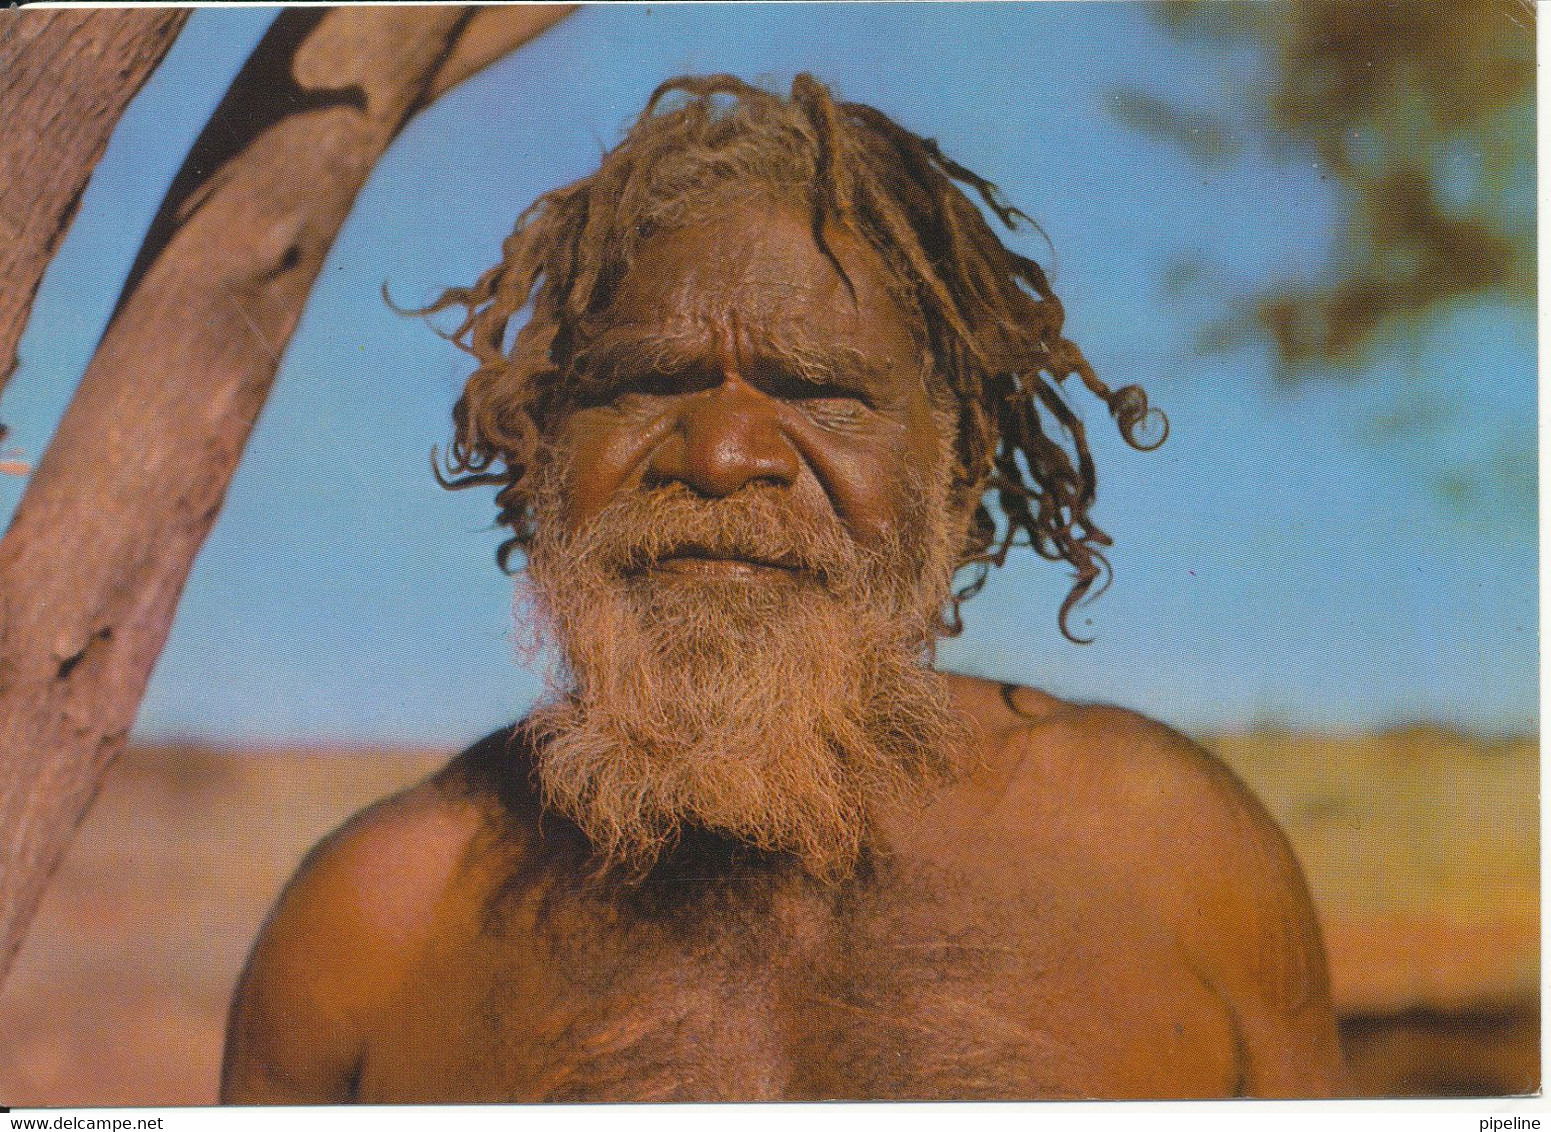 Australian Postcard Sent To Denmark With Thailand Stamp (Central Australia Aborigine) - Aborigines